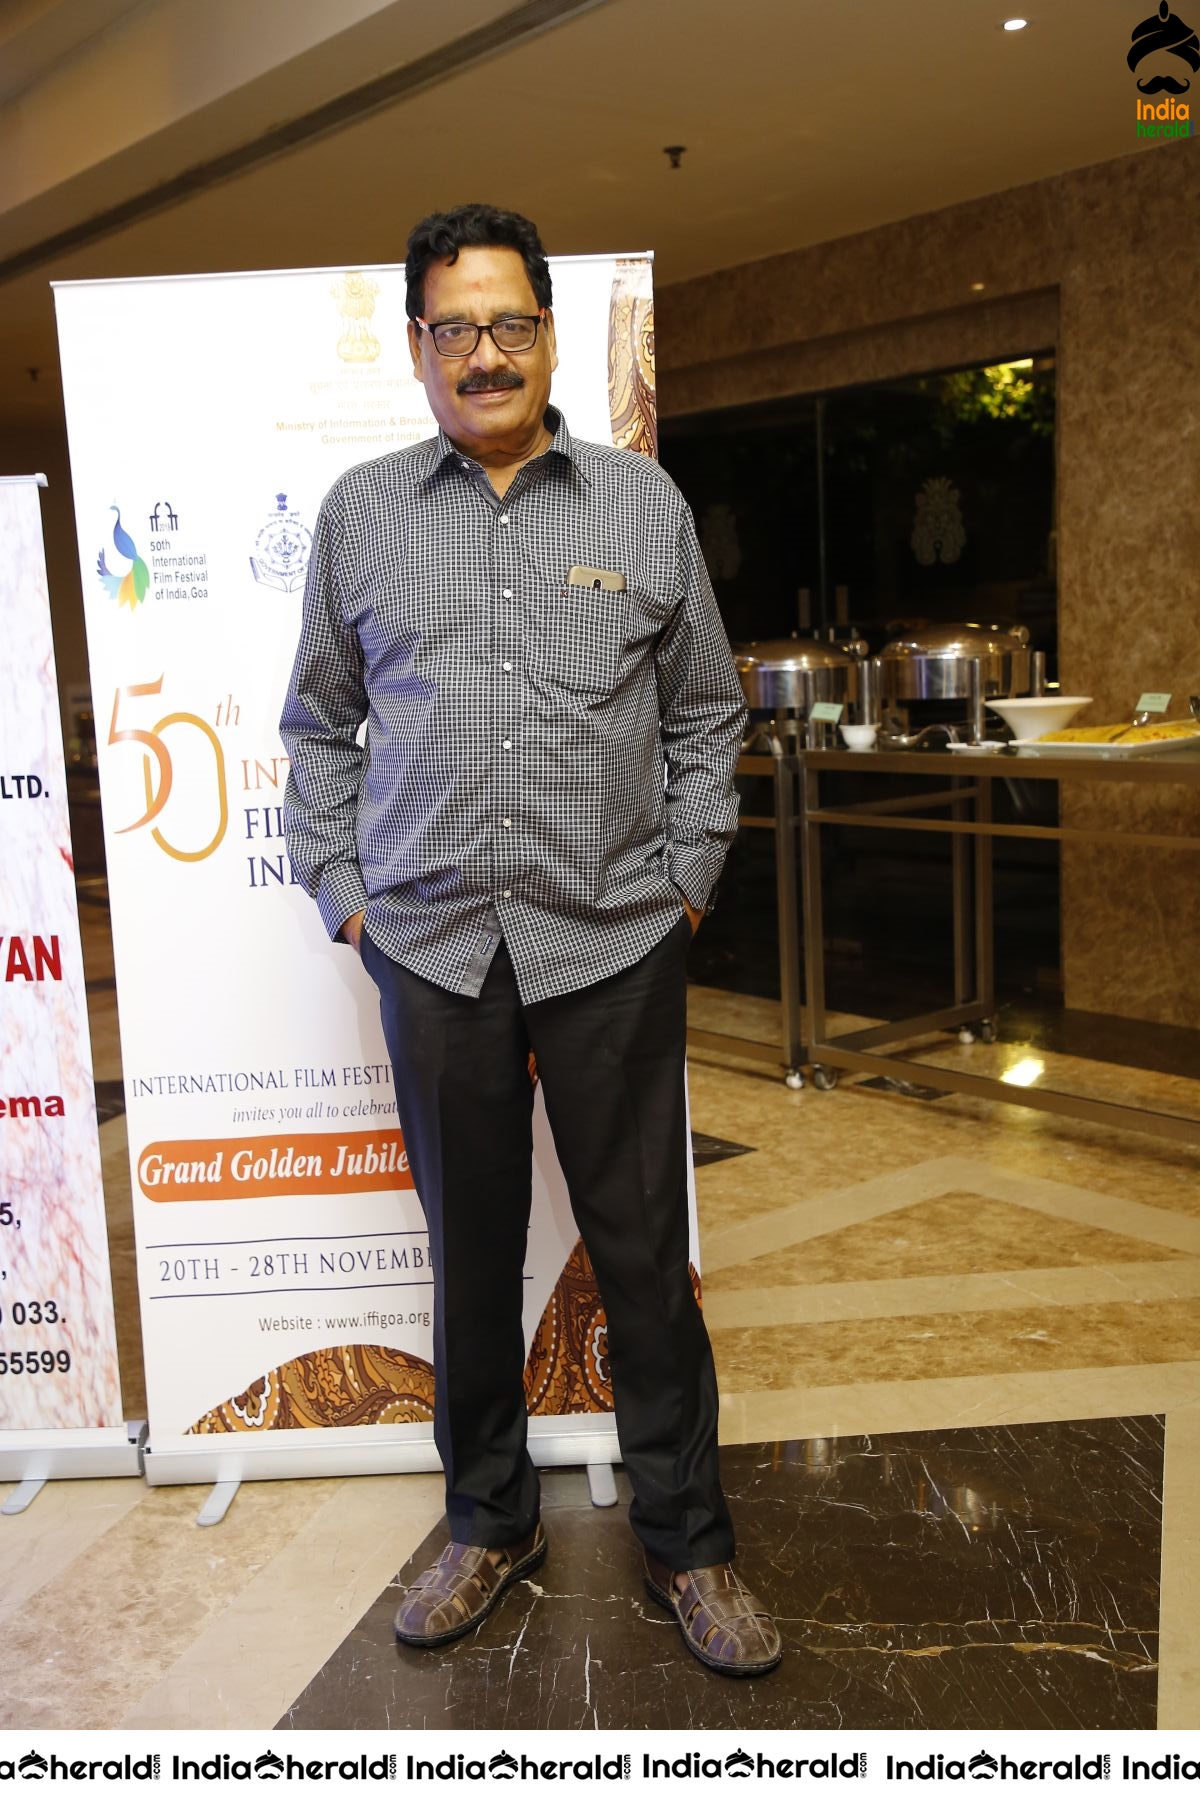 International Film Festival of India Event Photos at Chennai Set 3